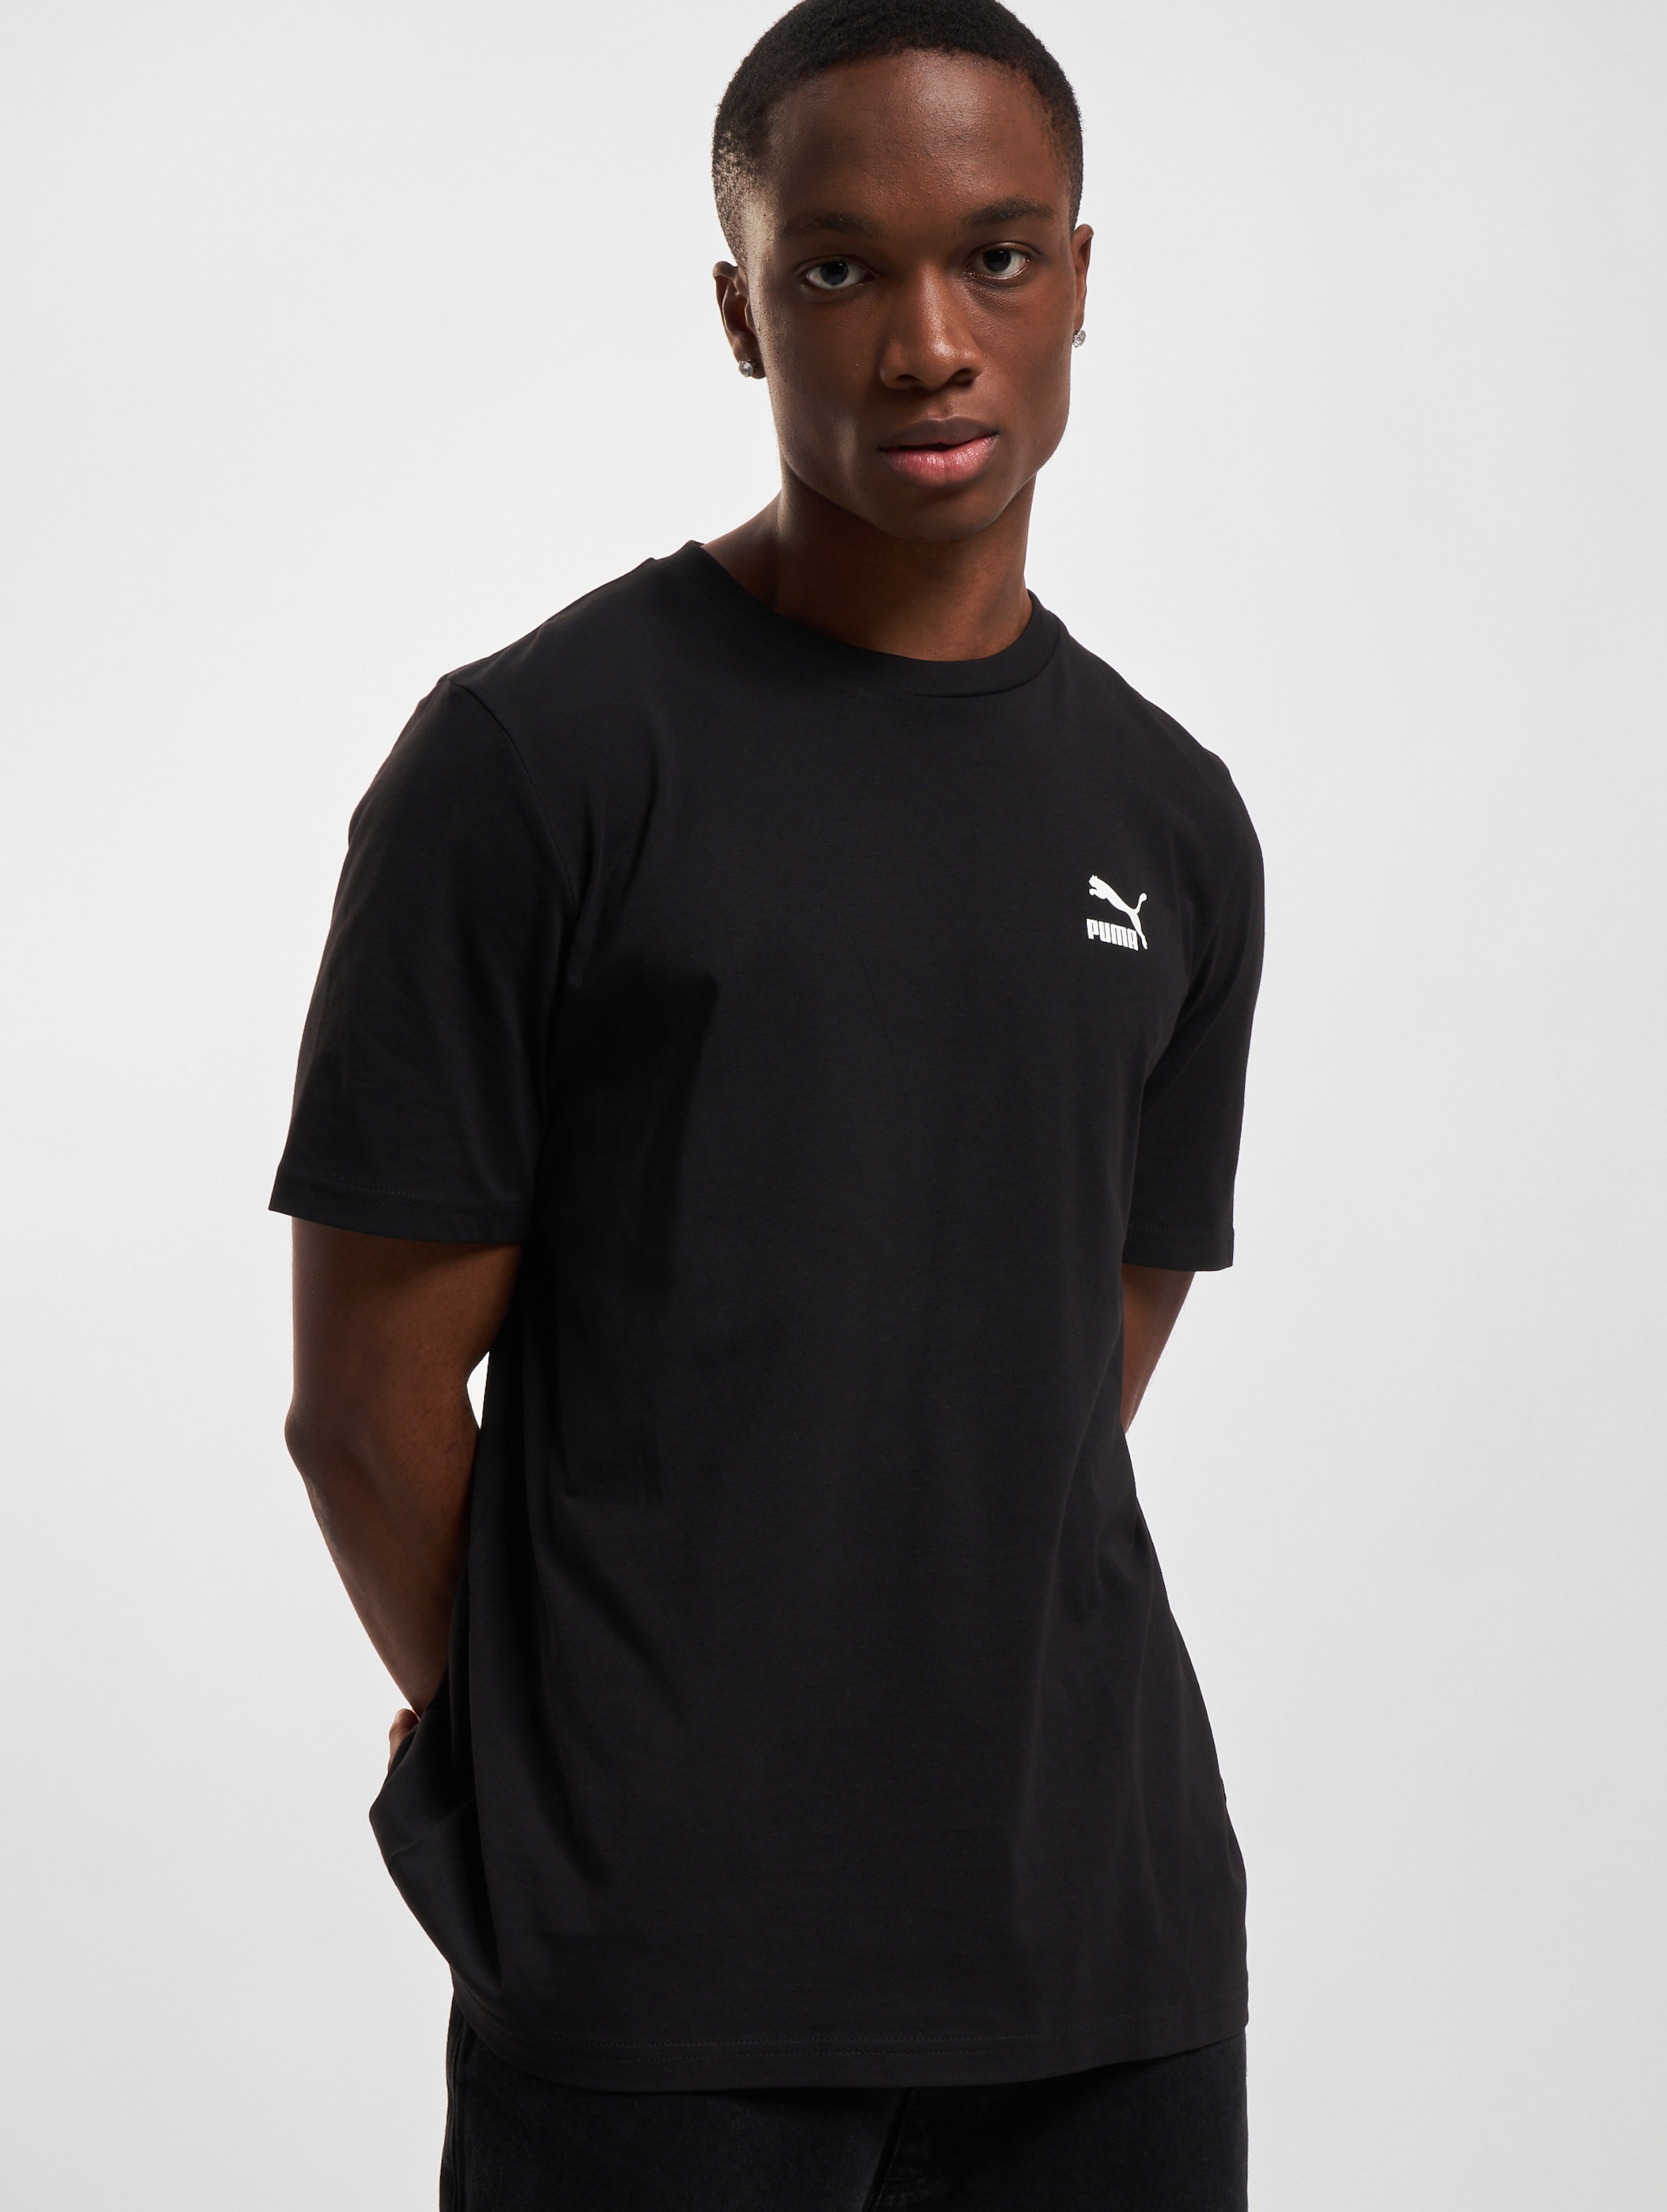 Puma T-Shirts for Men buy online | DEFSHOP